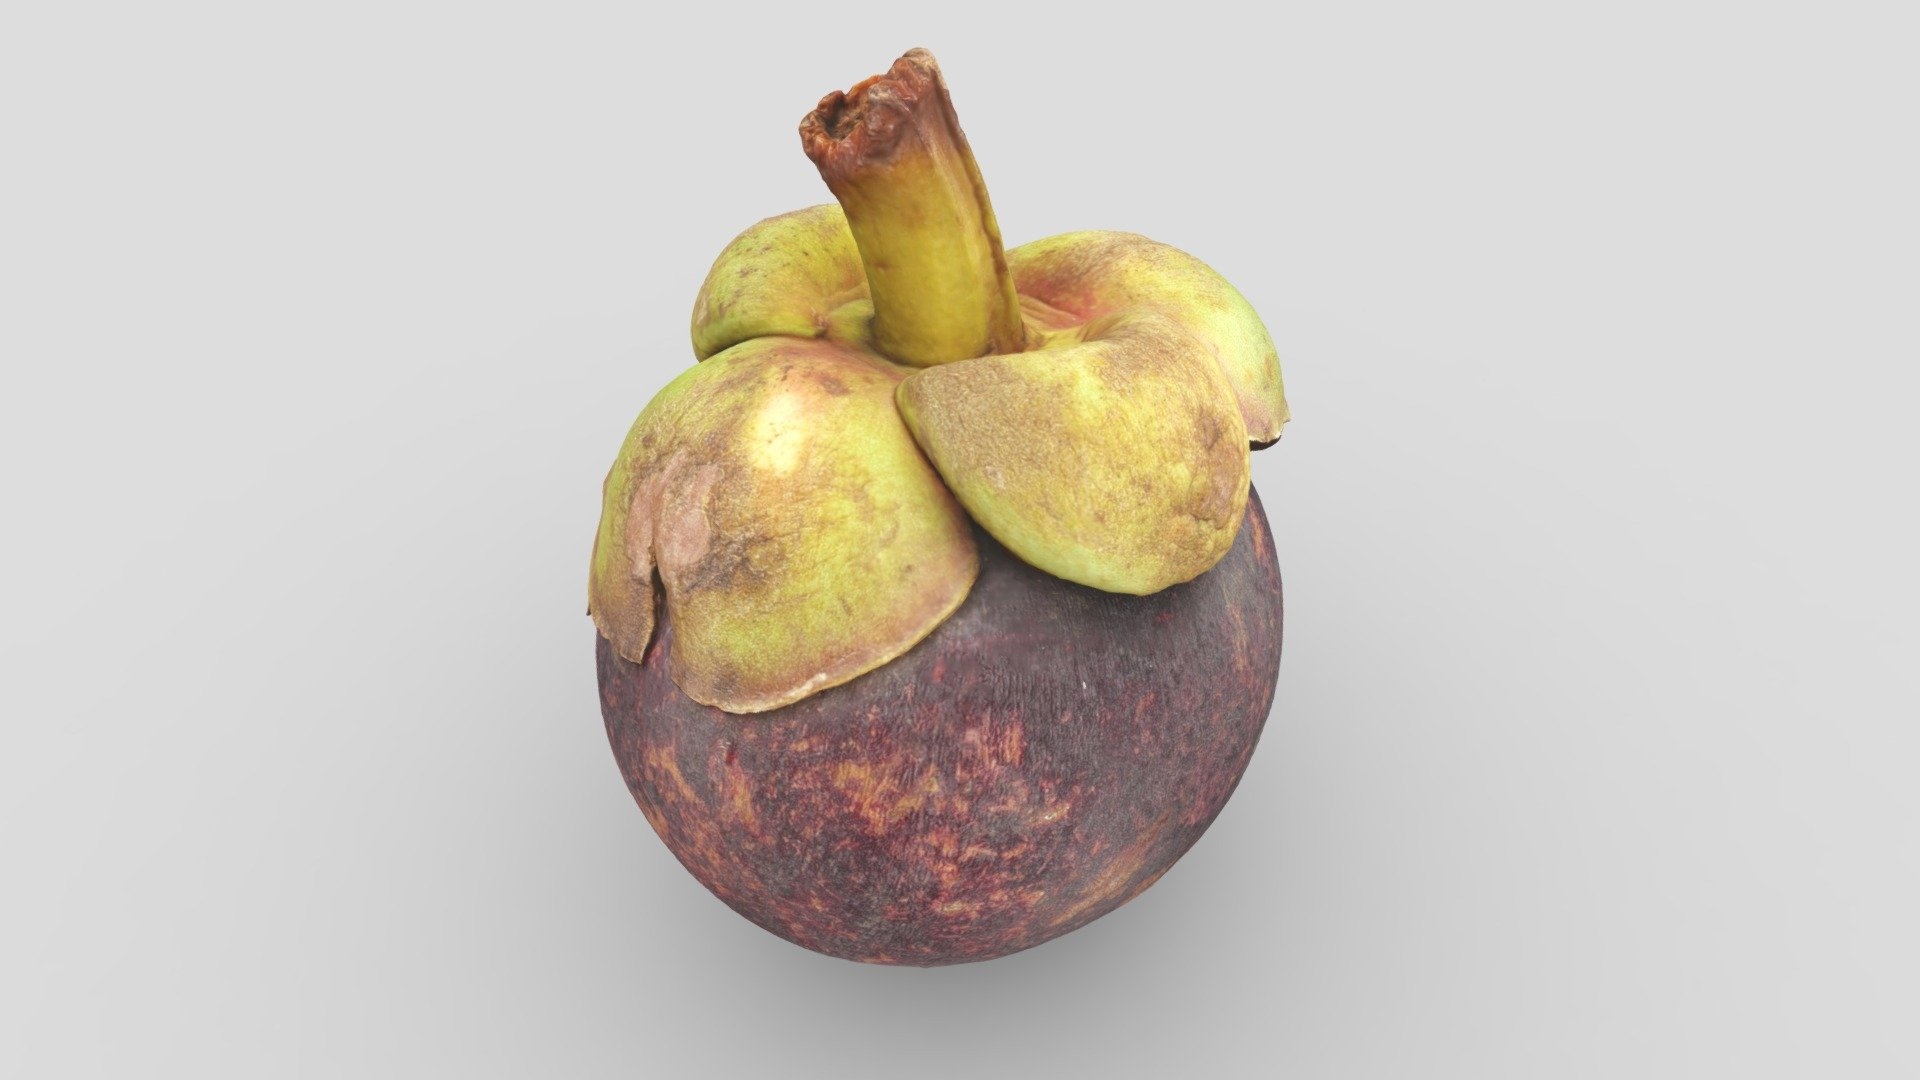 Mangosteen: Most fruits have around 4-8 juicy segments, Terrestrial plant. 1920x1080 Full HD Wallpaper.